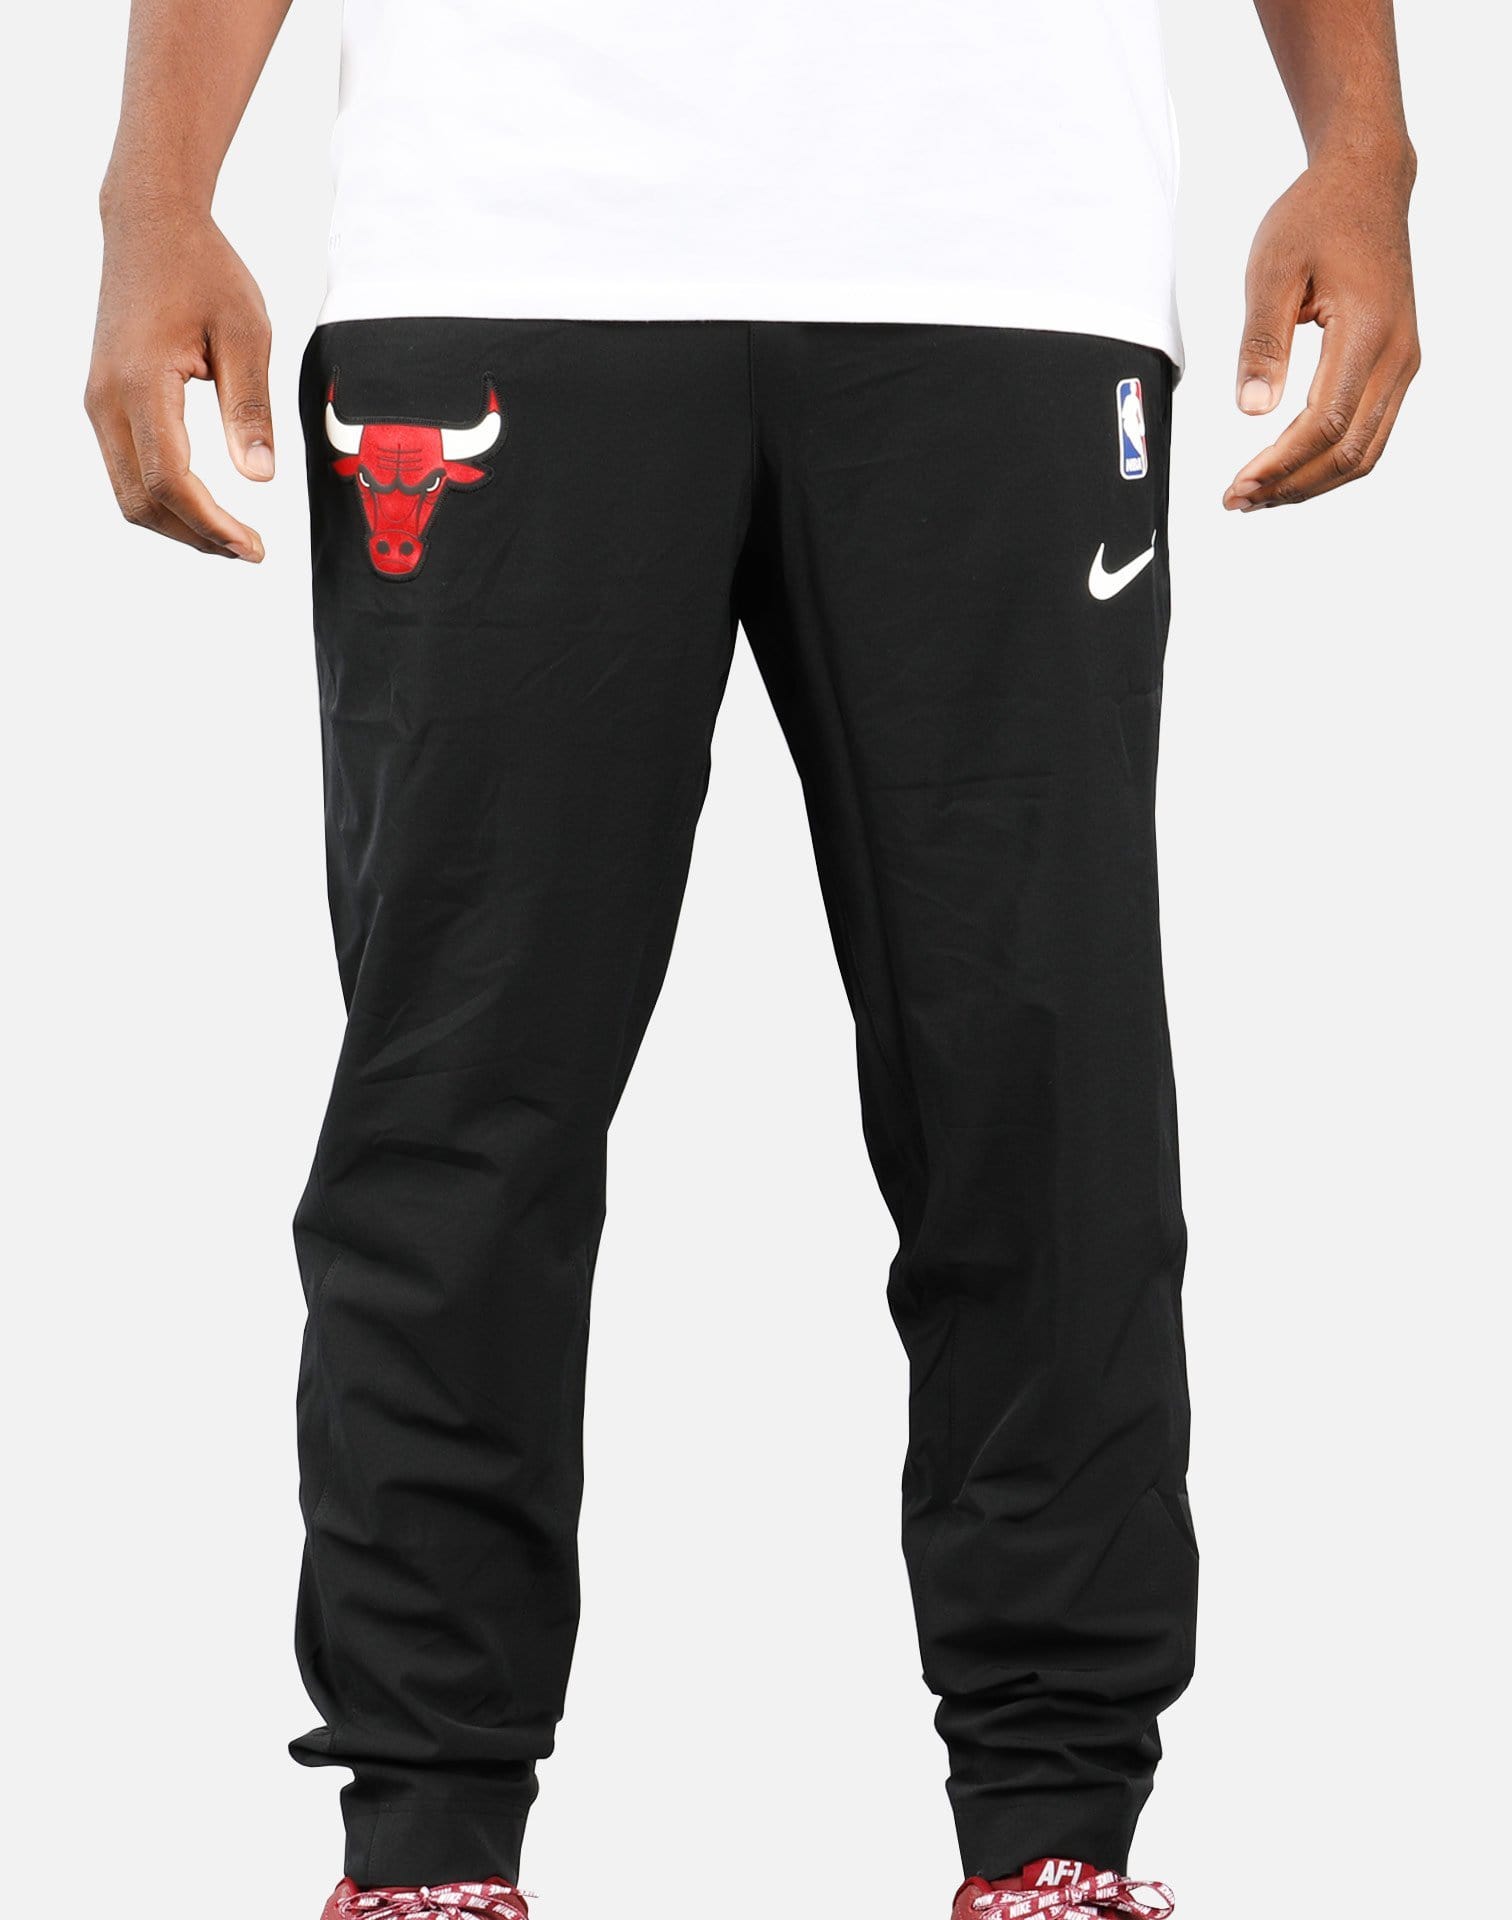 Pantalon NBA Chicago Bulls Nike Showtime university red/black/white -  Basket4Ballers